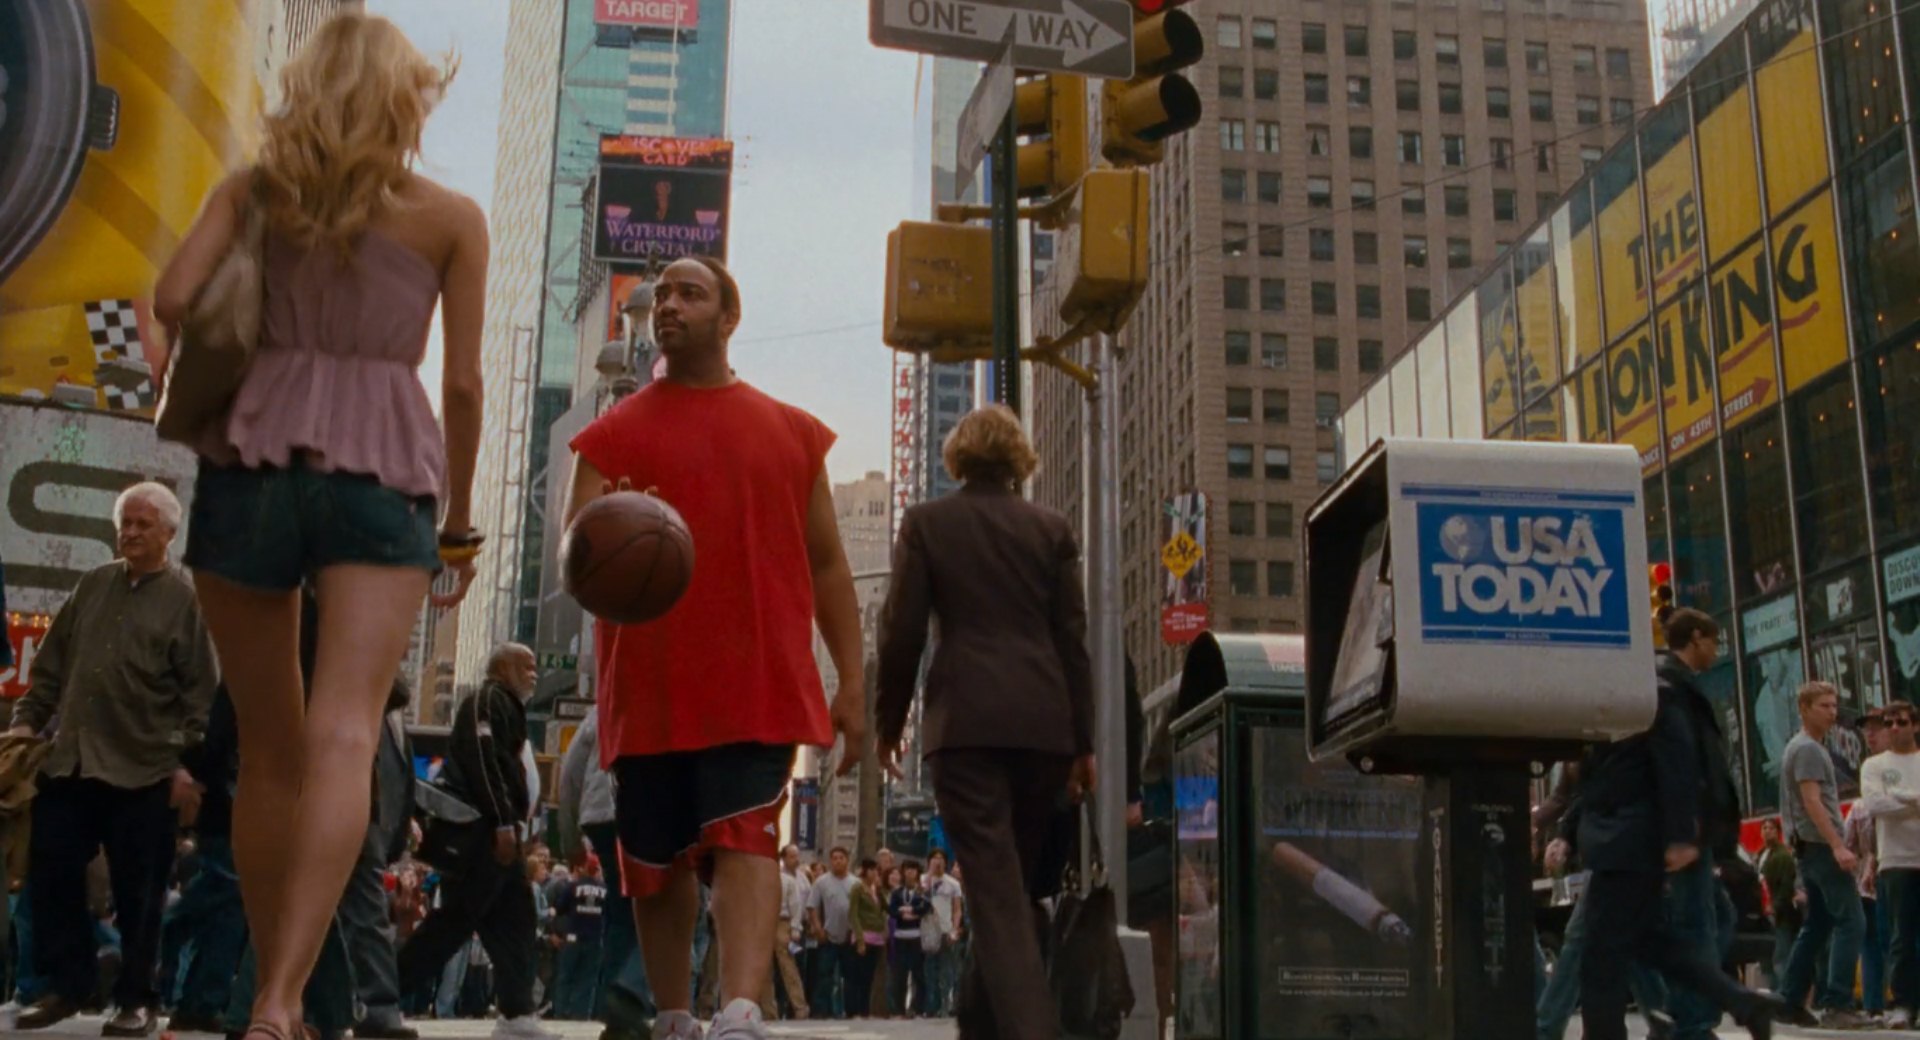 Will Dennis' basketball crush Eddie Murphy & Gabrielle Union in Time Square? -Meet Dave film